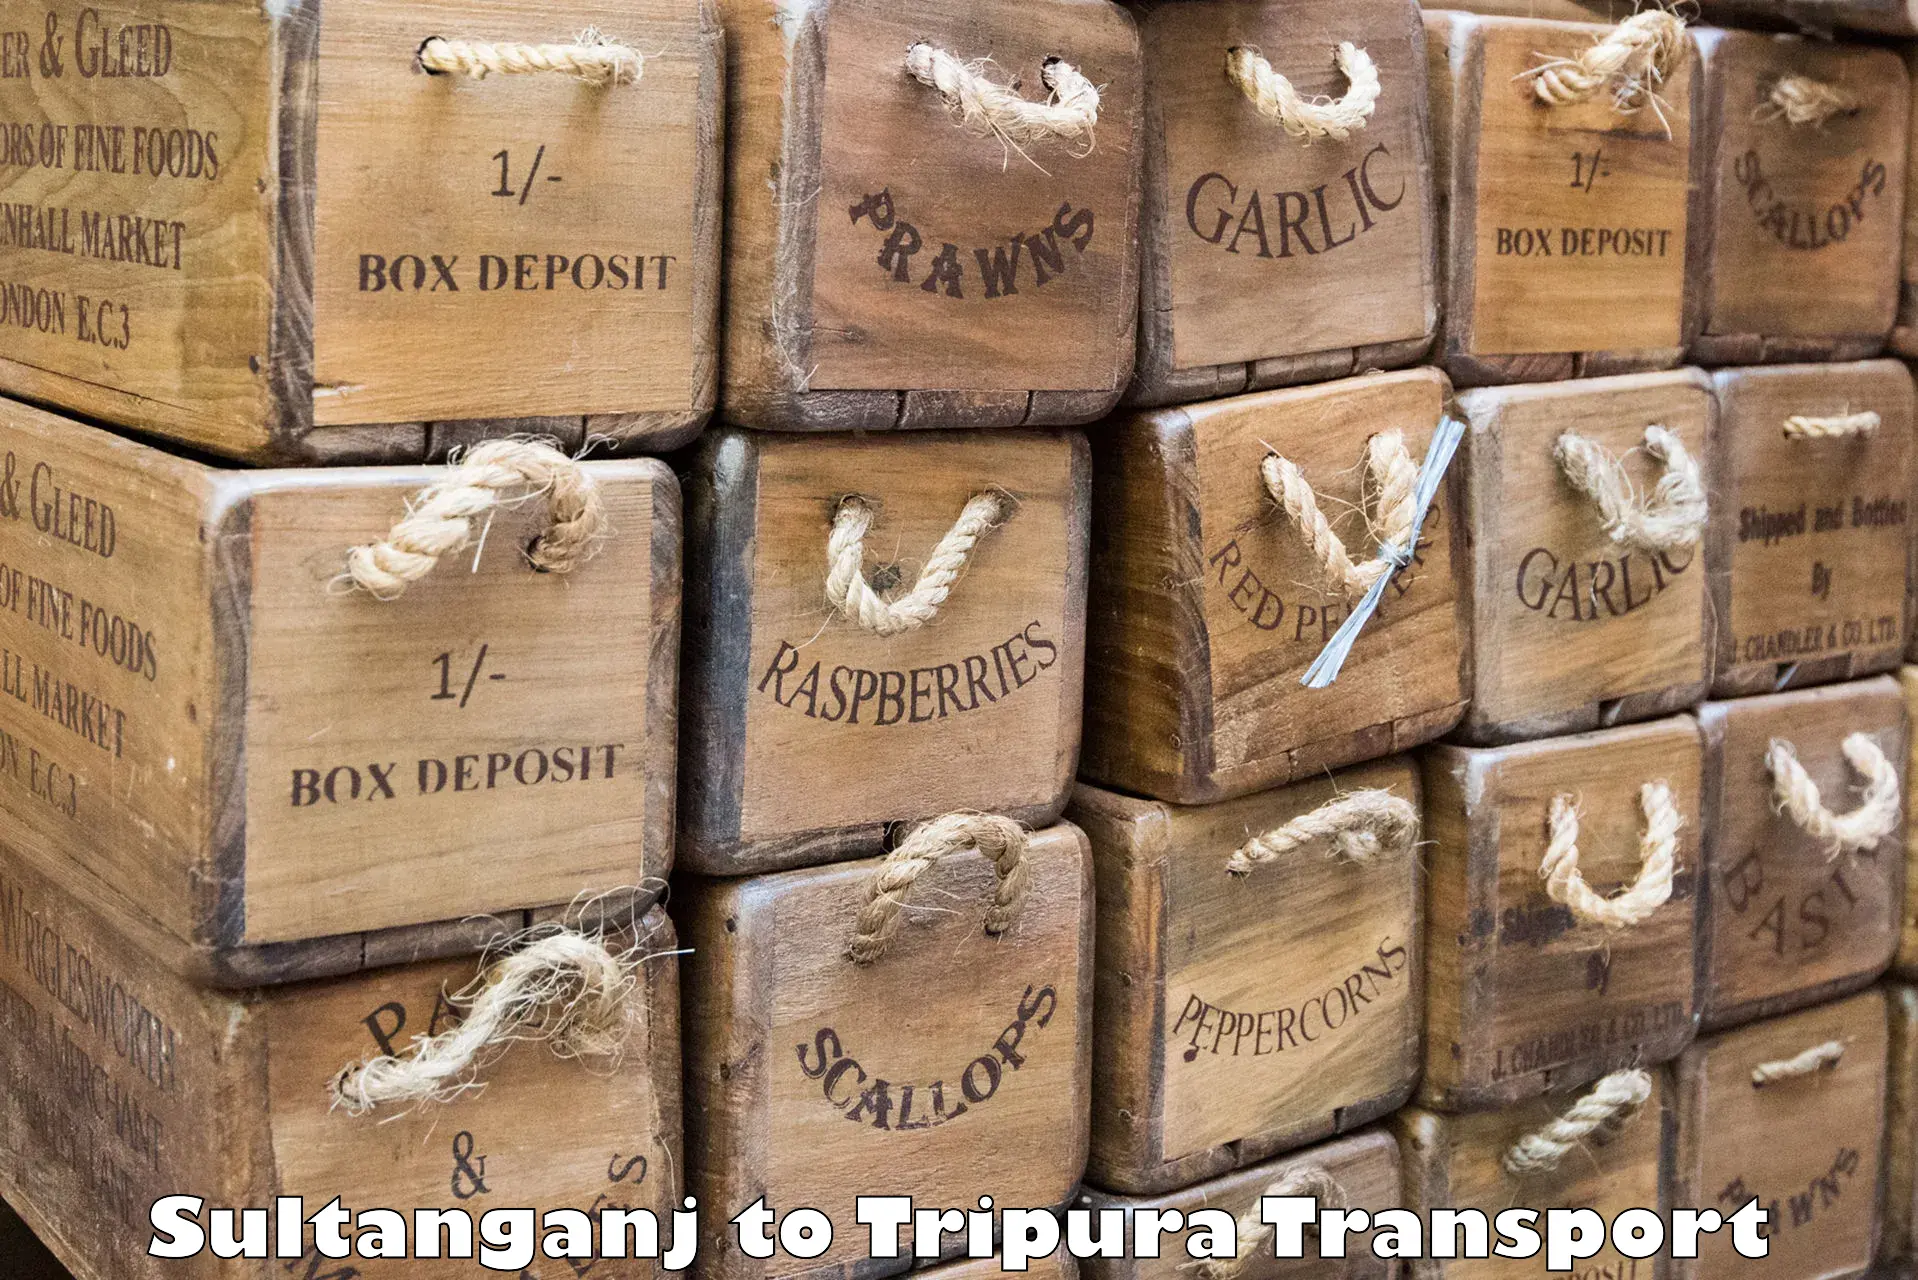 Shipping partner Sultanganj to Kamalpur